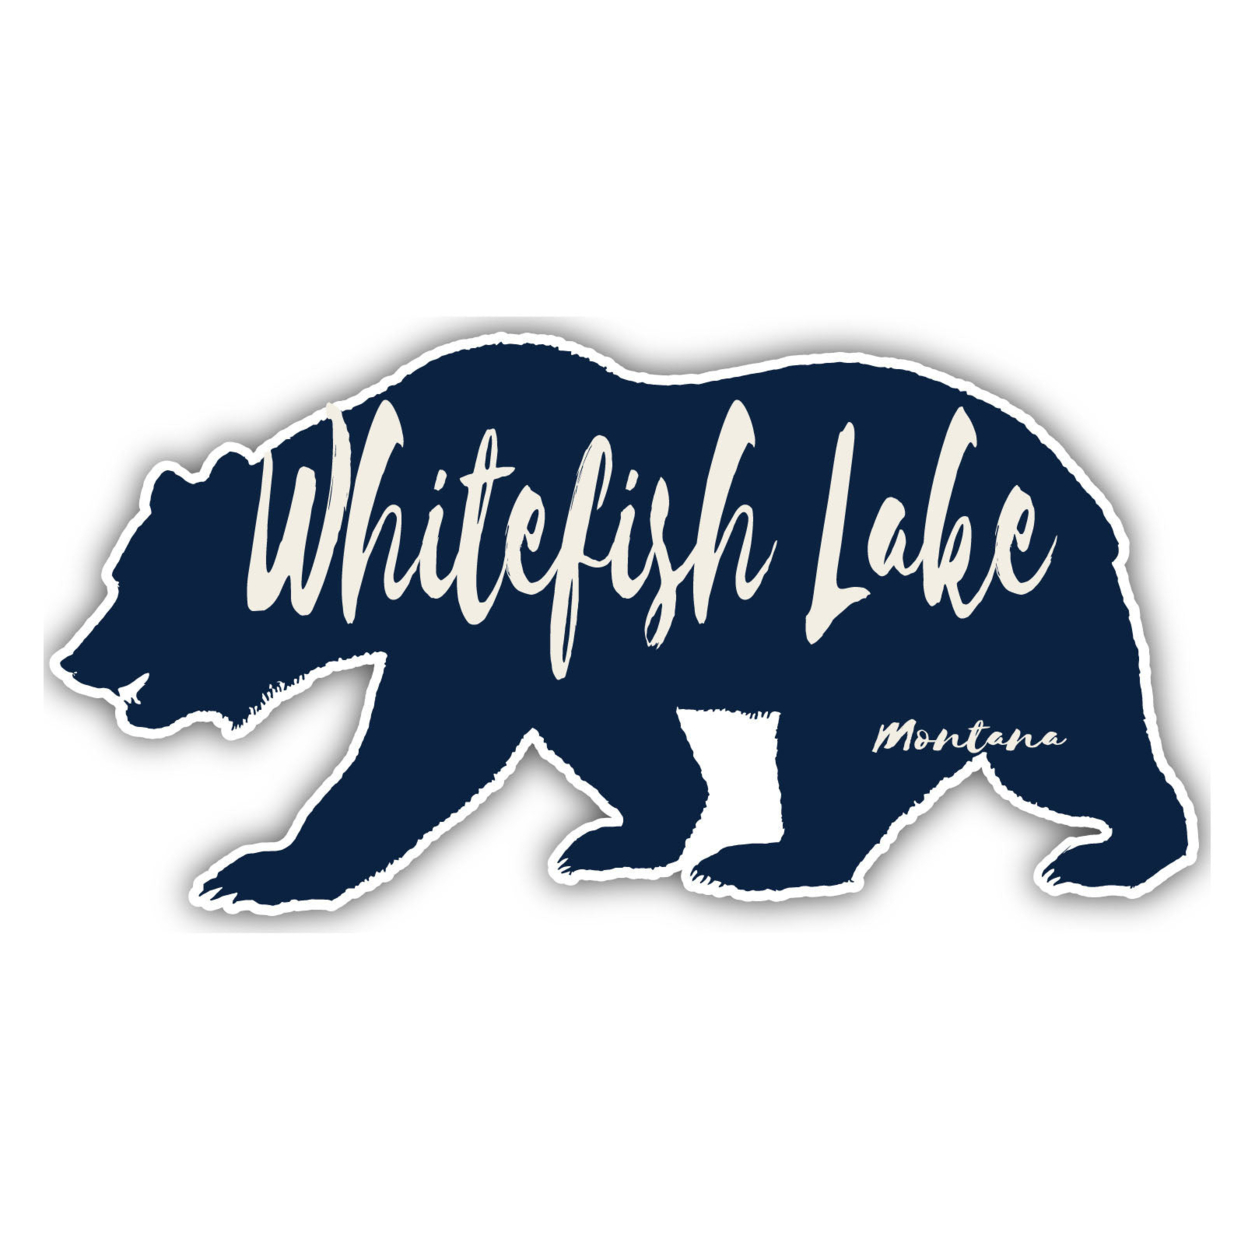 Whitefish Lake Montana Souvenir Decorative Stickers (Choose Theme And Size) - Single Unit, 4-Inch, Bear